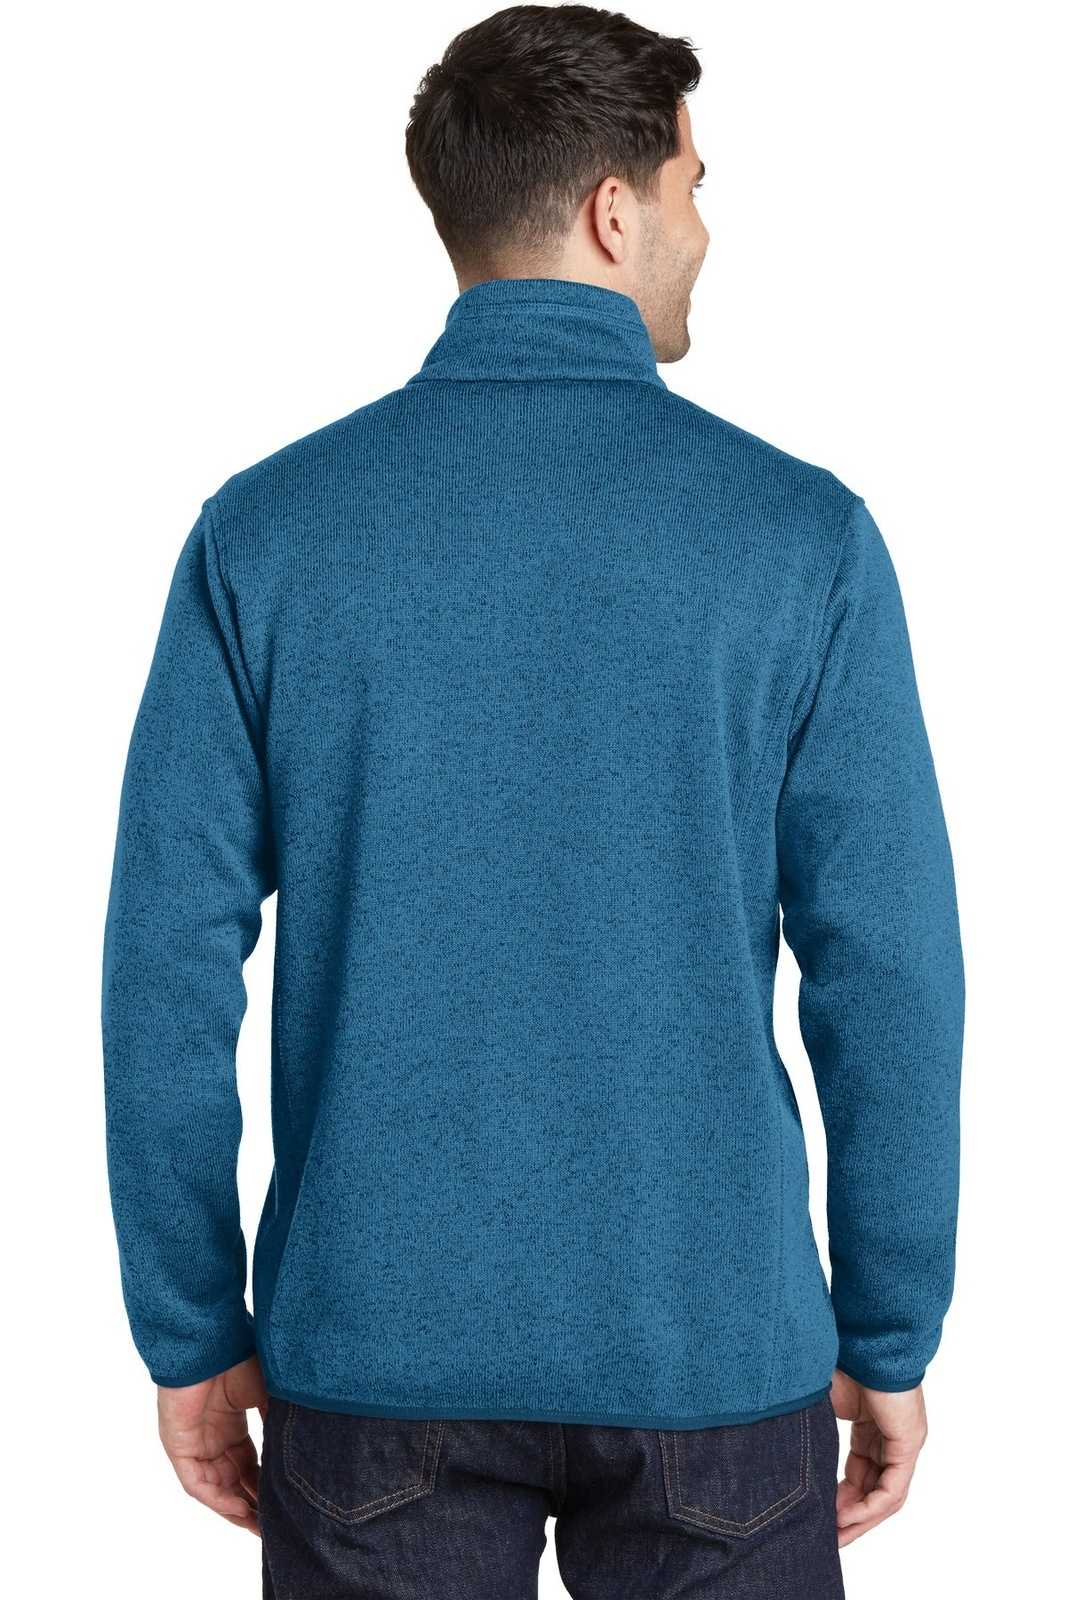 Port Authority F232 Sweater Fleece Jacket - Medium Blue Heather - HIT a Double - 1